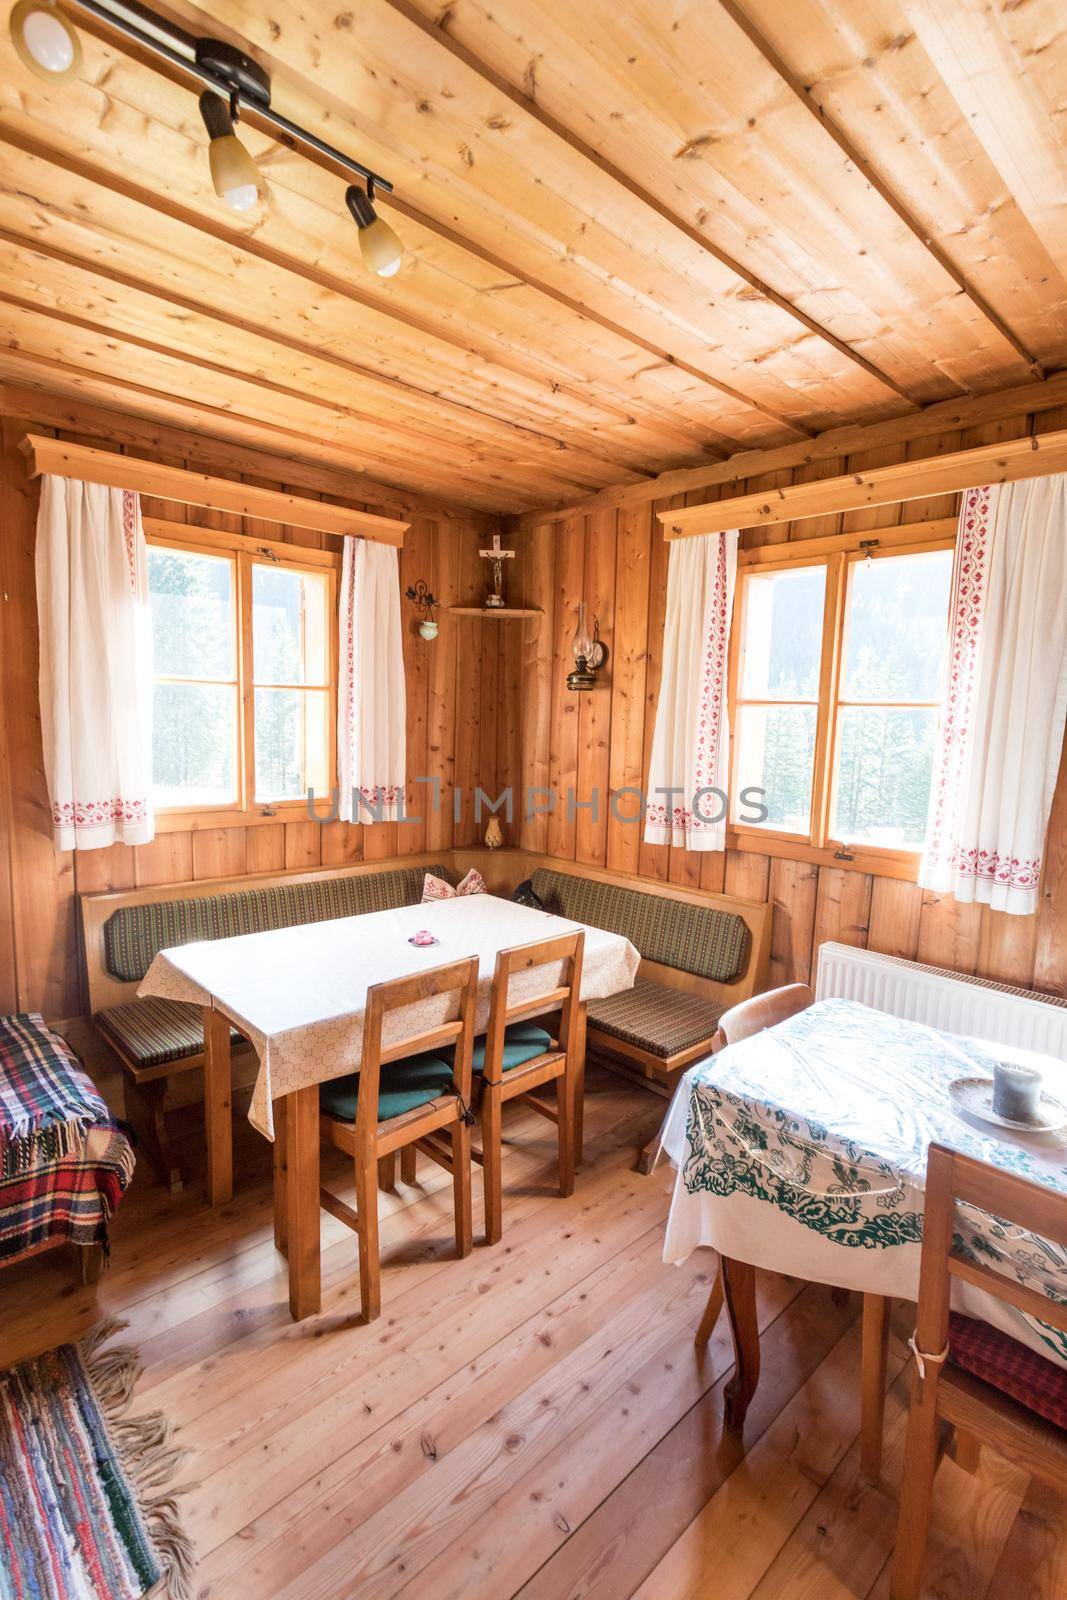 Inside of a rustic wooden hut or cabin, Austria